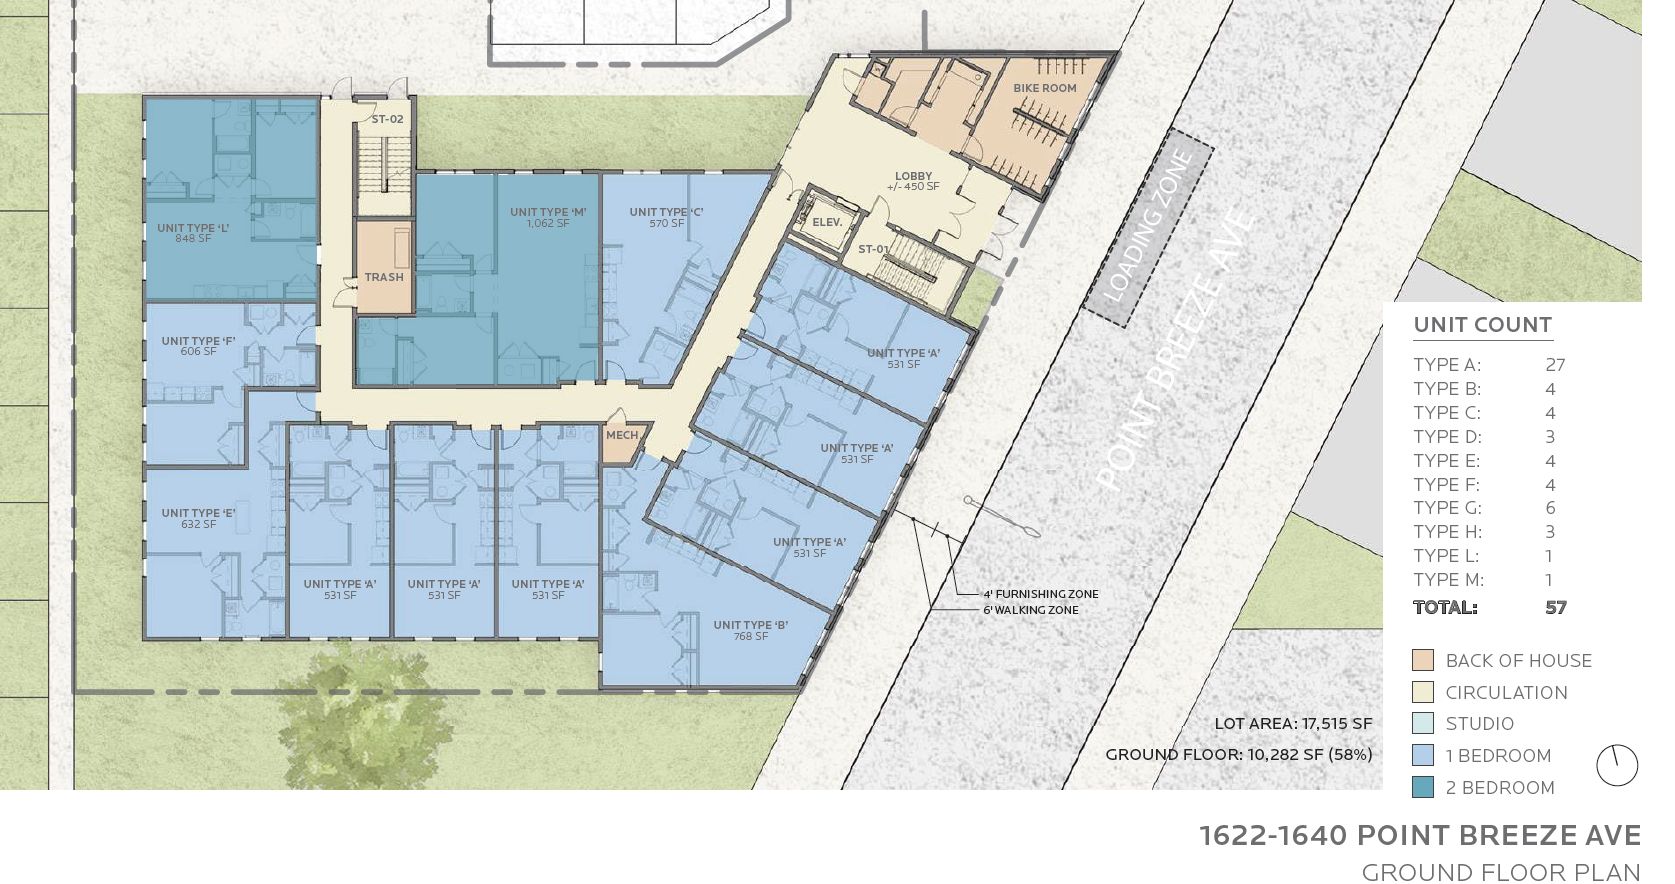 1622-40 Point Breeze Avenue. Floor plan - ground level. Credit: JKRP Architects via the Civic Design Review